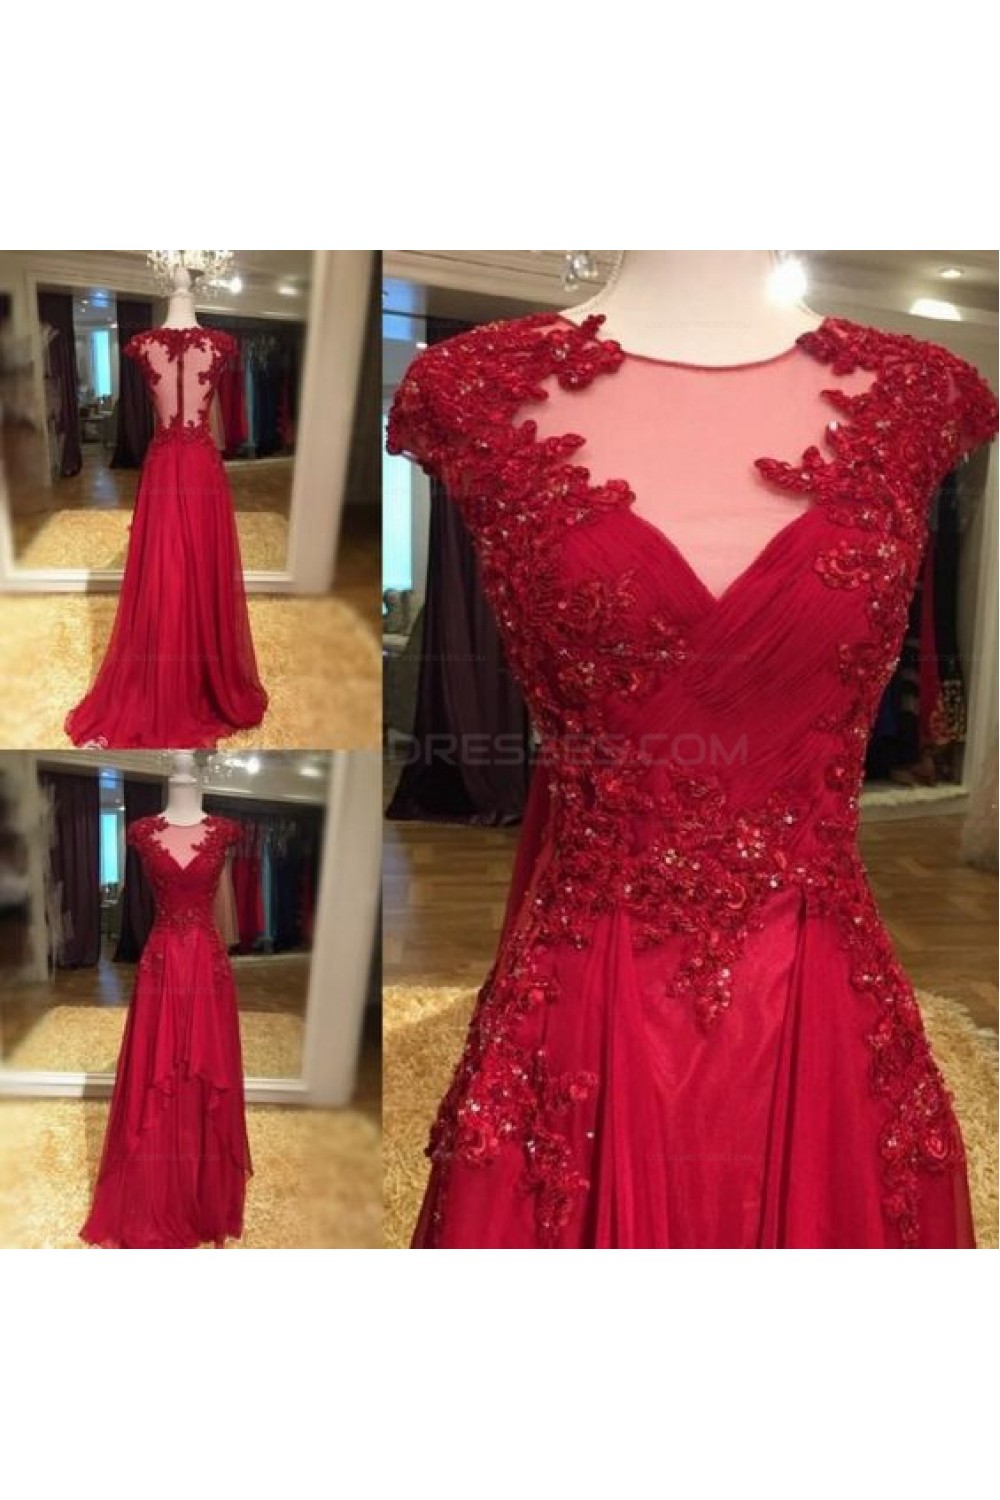 red beaded dress